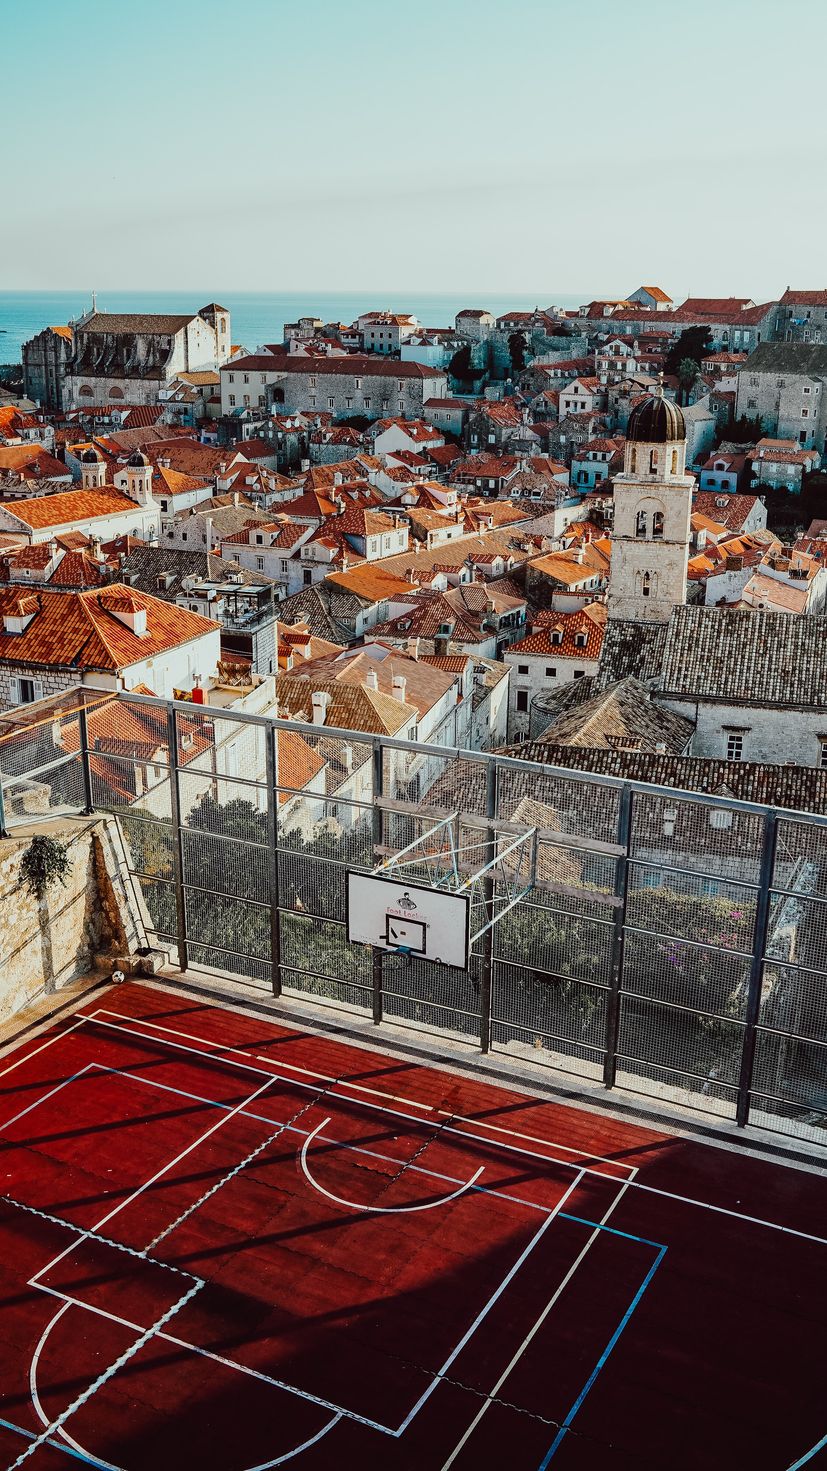 Croatian basketball court named world’s best designed court